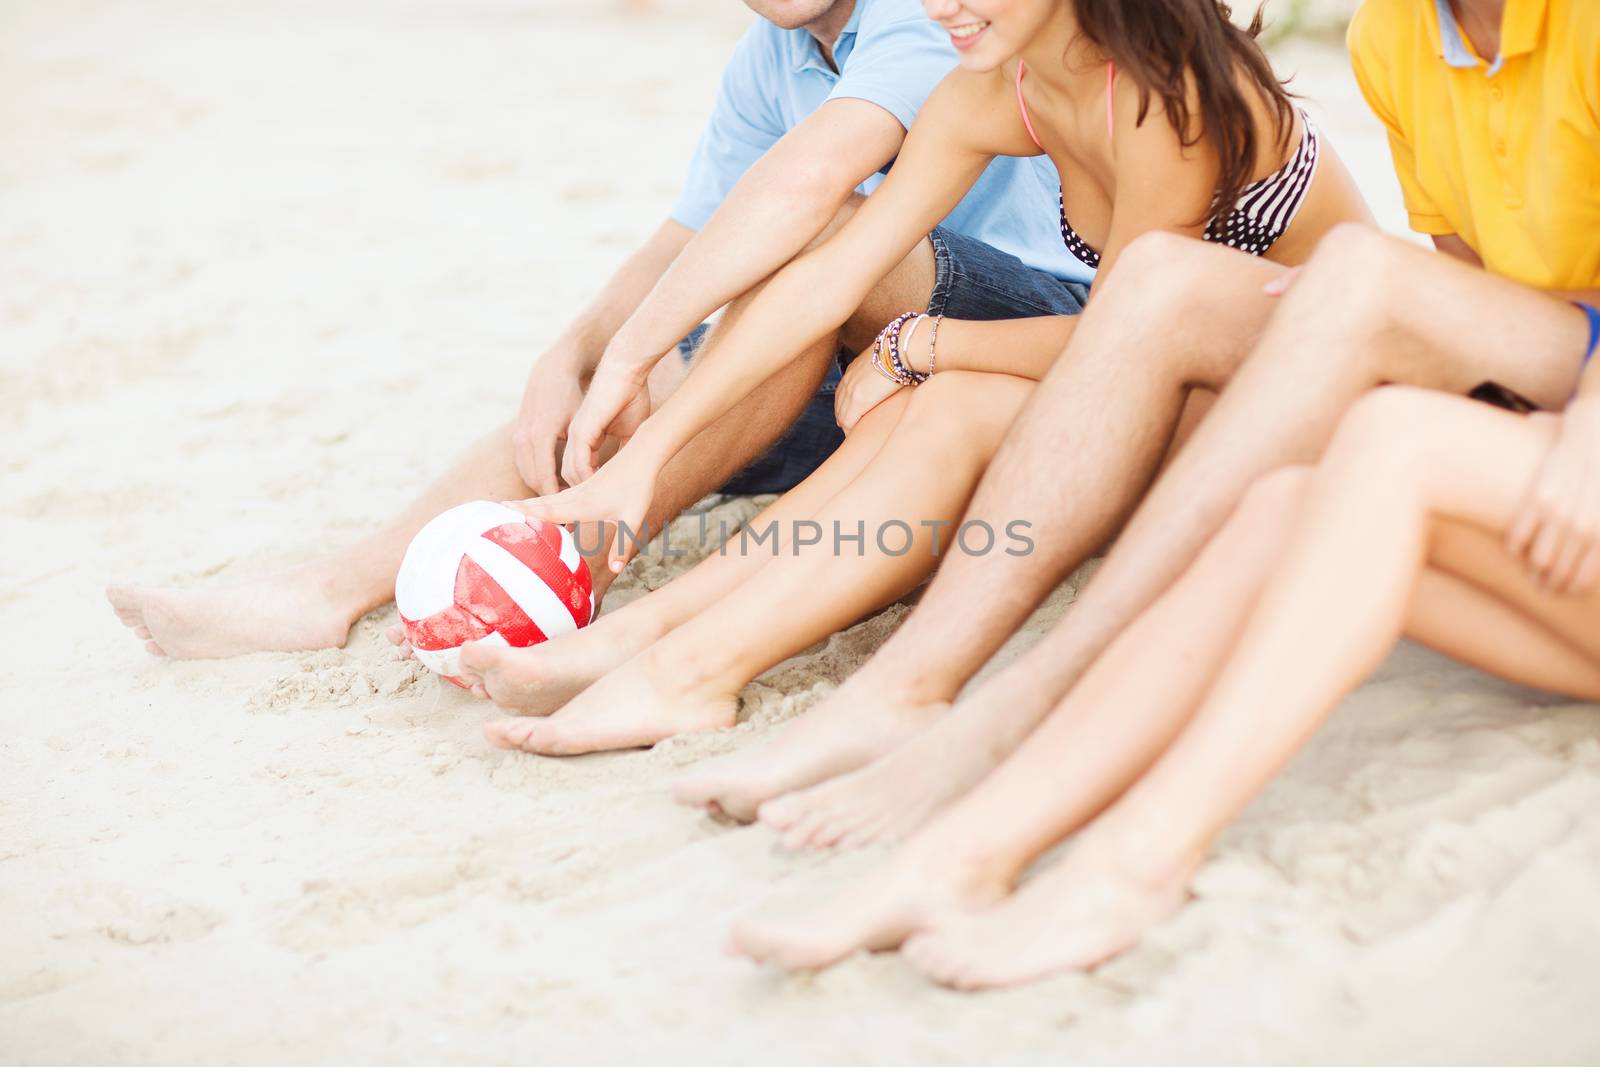 teenager friends or volleyball team having fun by dolgachov